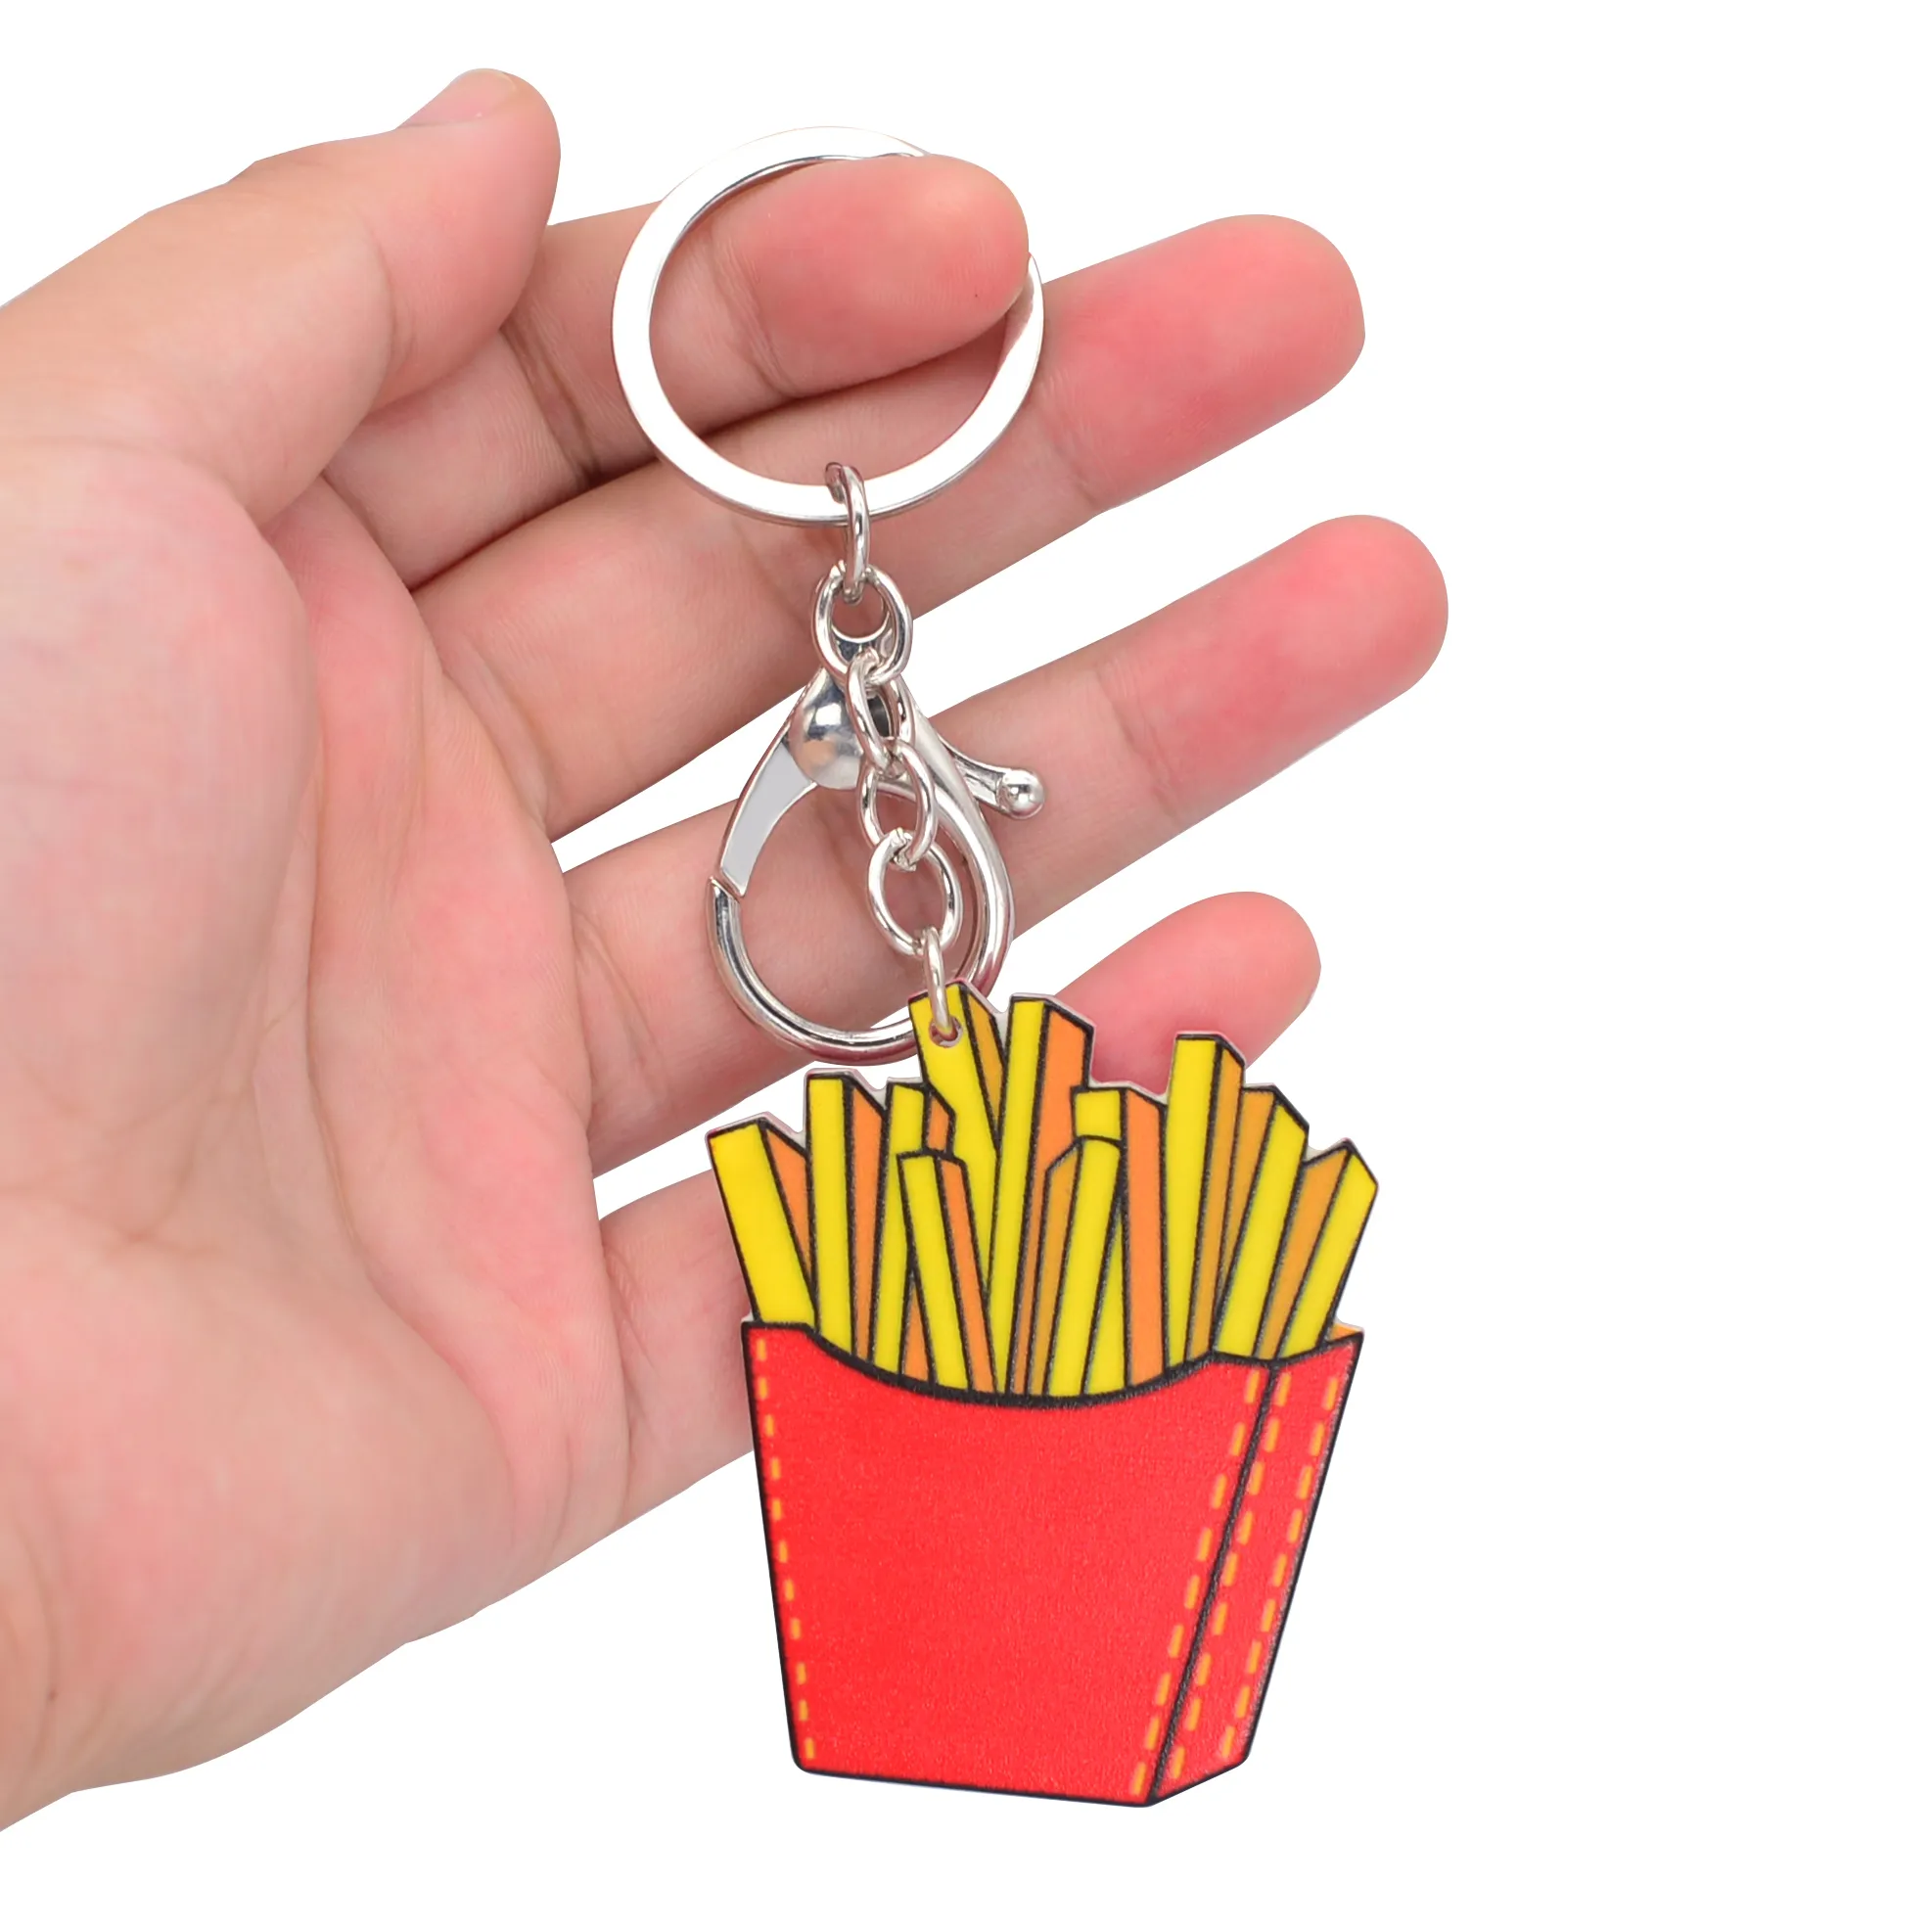 Cute Cartoon Acrylic Keychains Creative Food Chips Key Chain Jewelry For Women Kids Girls Gift Car Accessory